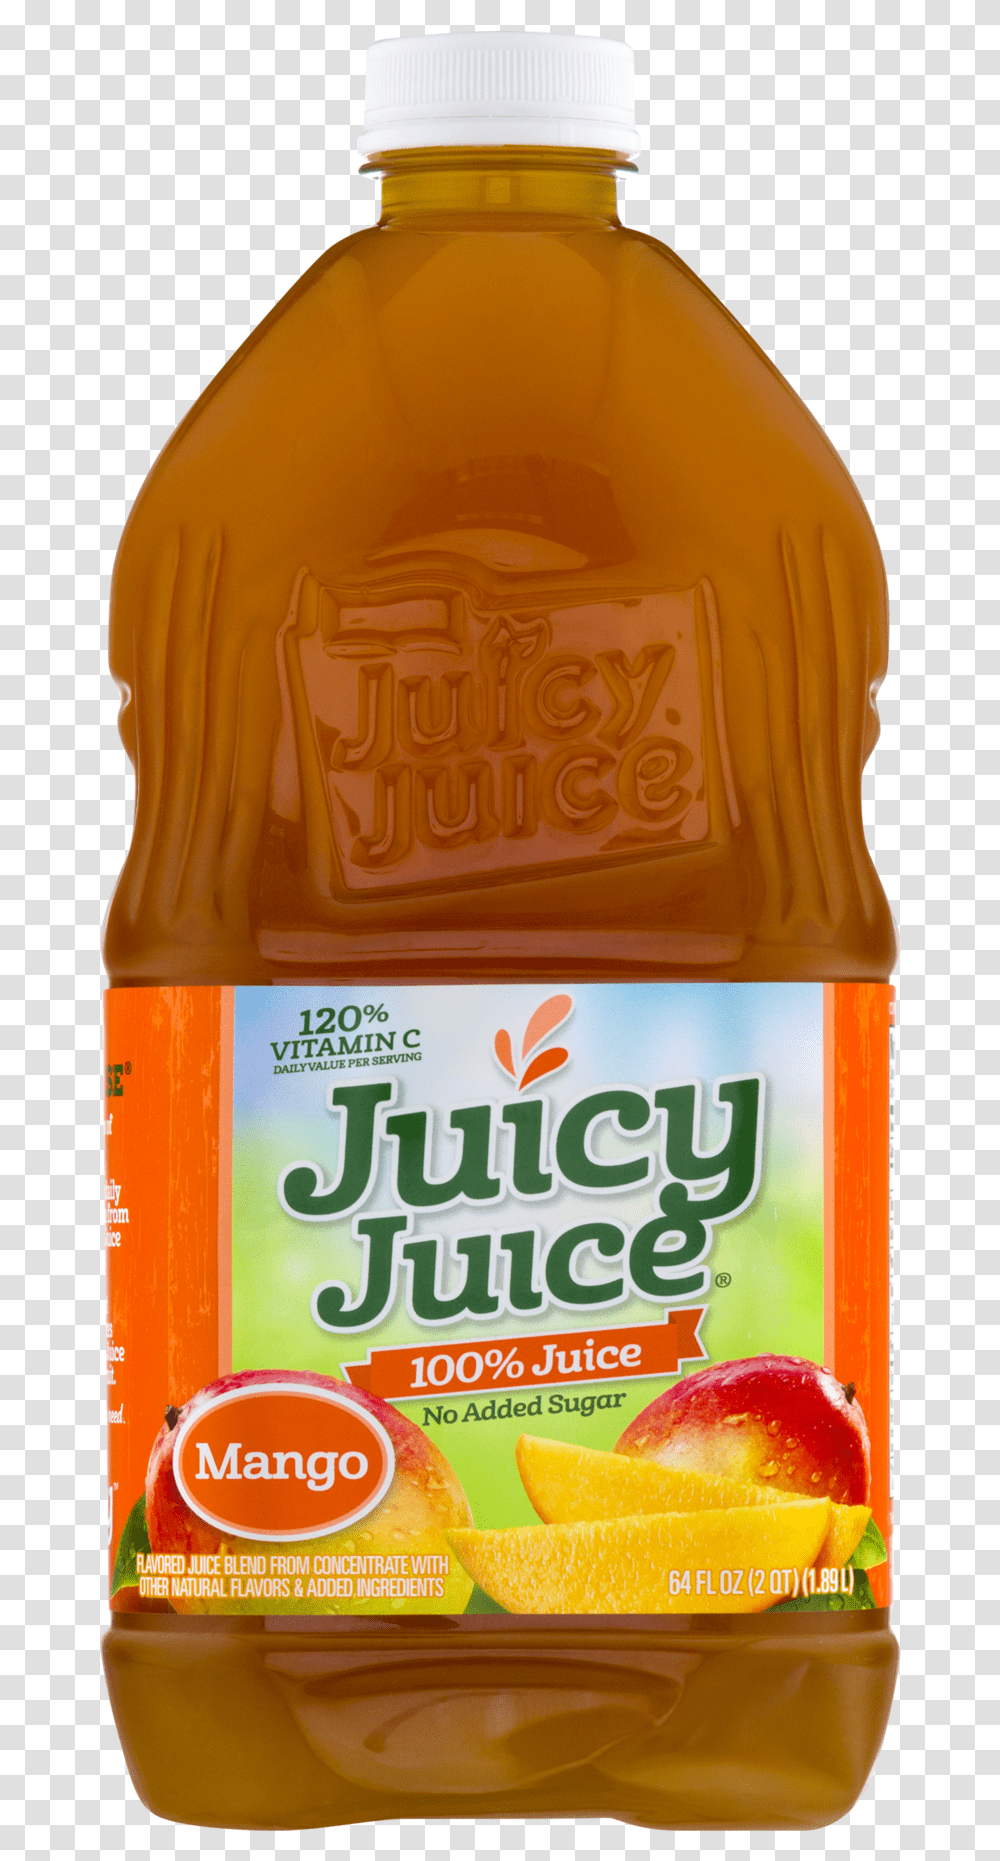 Download Juicy Juice Passion Dragon Fruit Image With No Juicebox, Beverage, Drink, Orange Juice, Pop Bottle Transparent Png